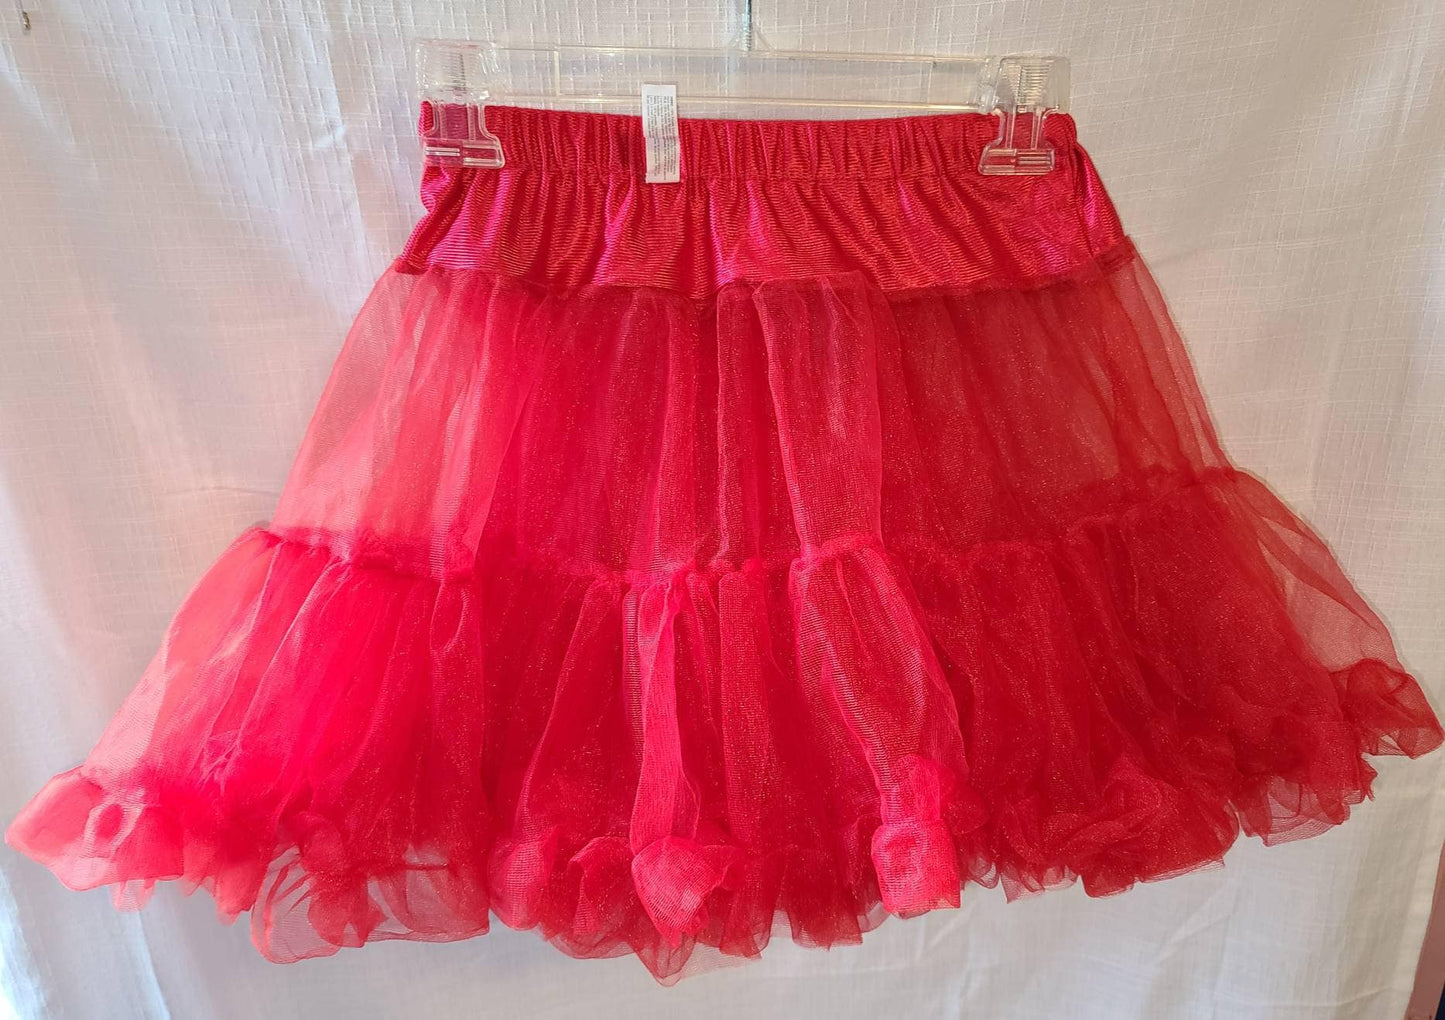 Vintage Girl's Petticoat 1950s Style Short Flouncy Red Nylon Ruffled Crinoline Elastic Waist Rockabilly Square Dance Girls L Womens XS